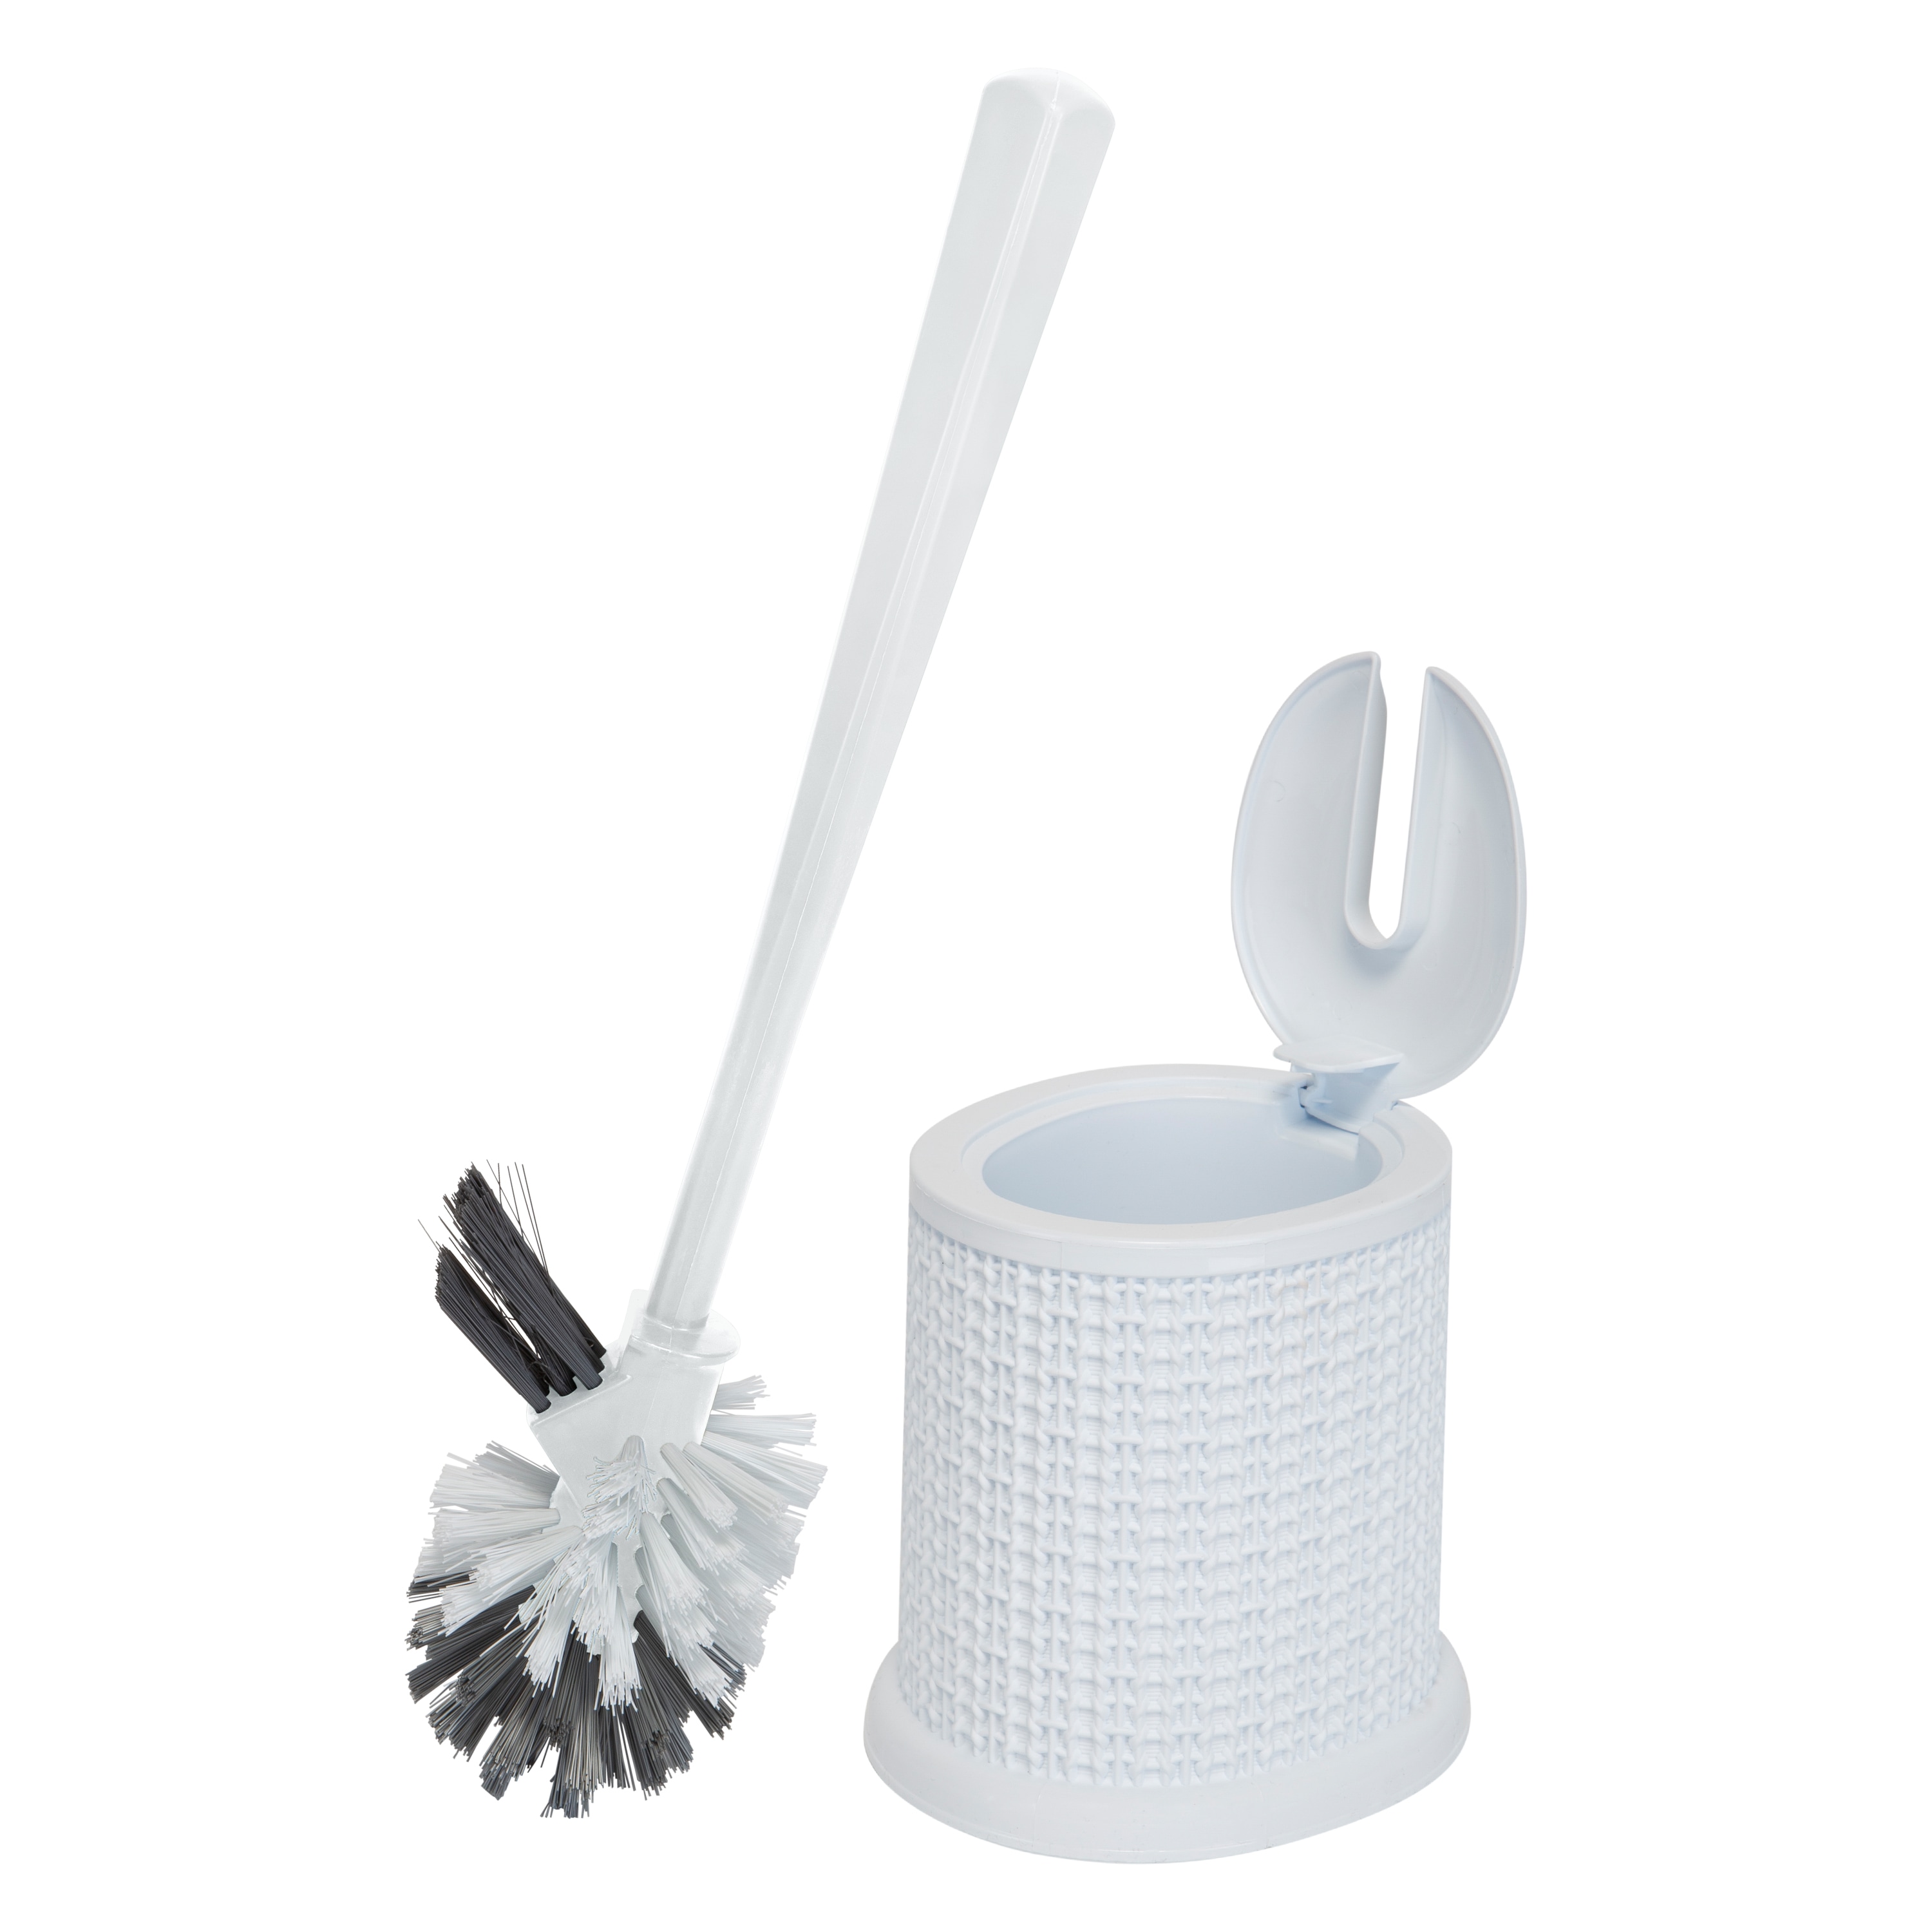 2 x Toilet Brush with Holder Set Cleaning Bristles Bathroom Shower